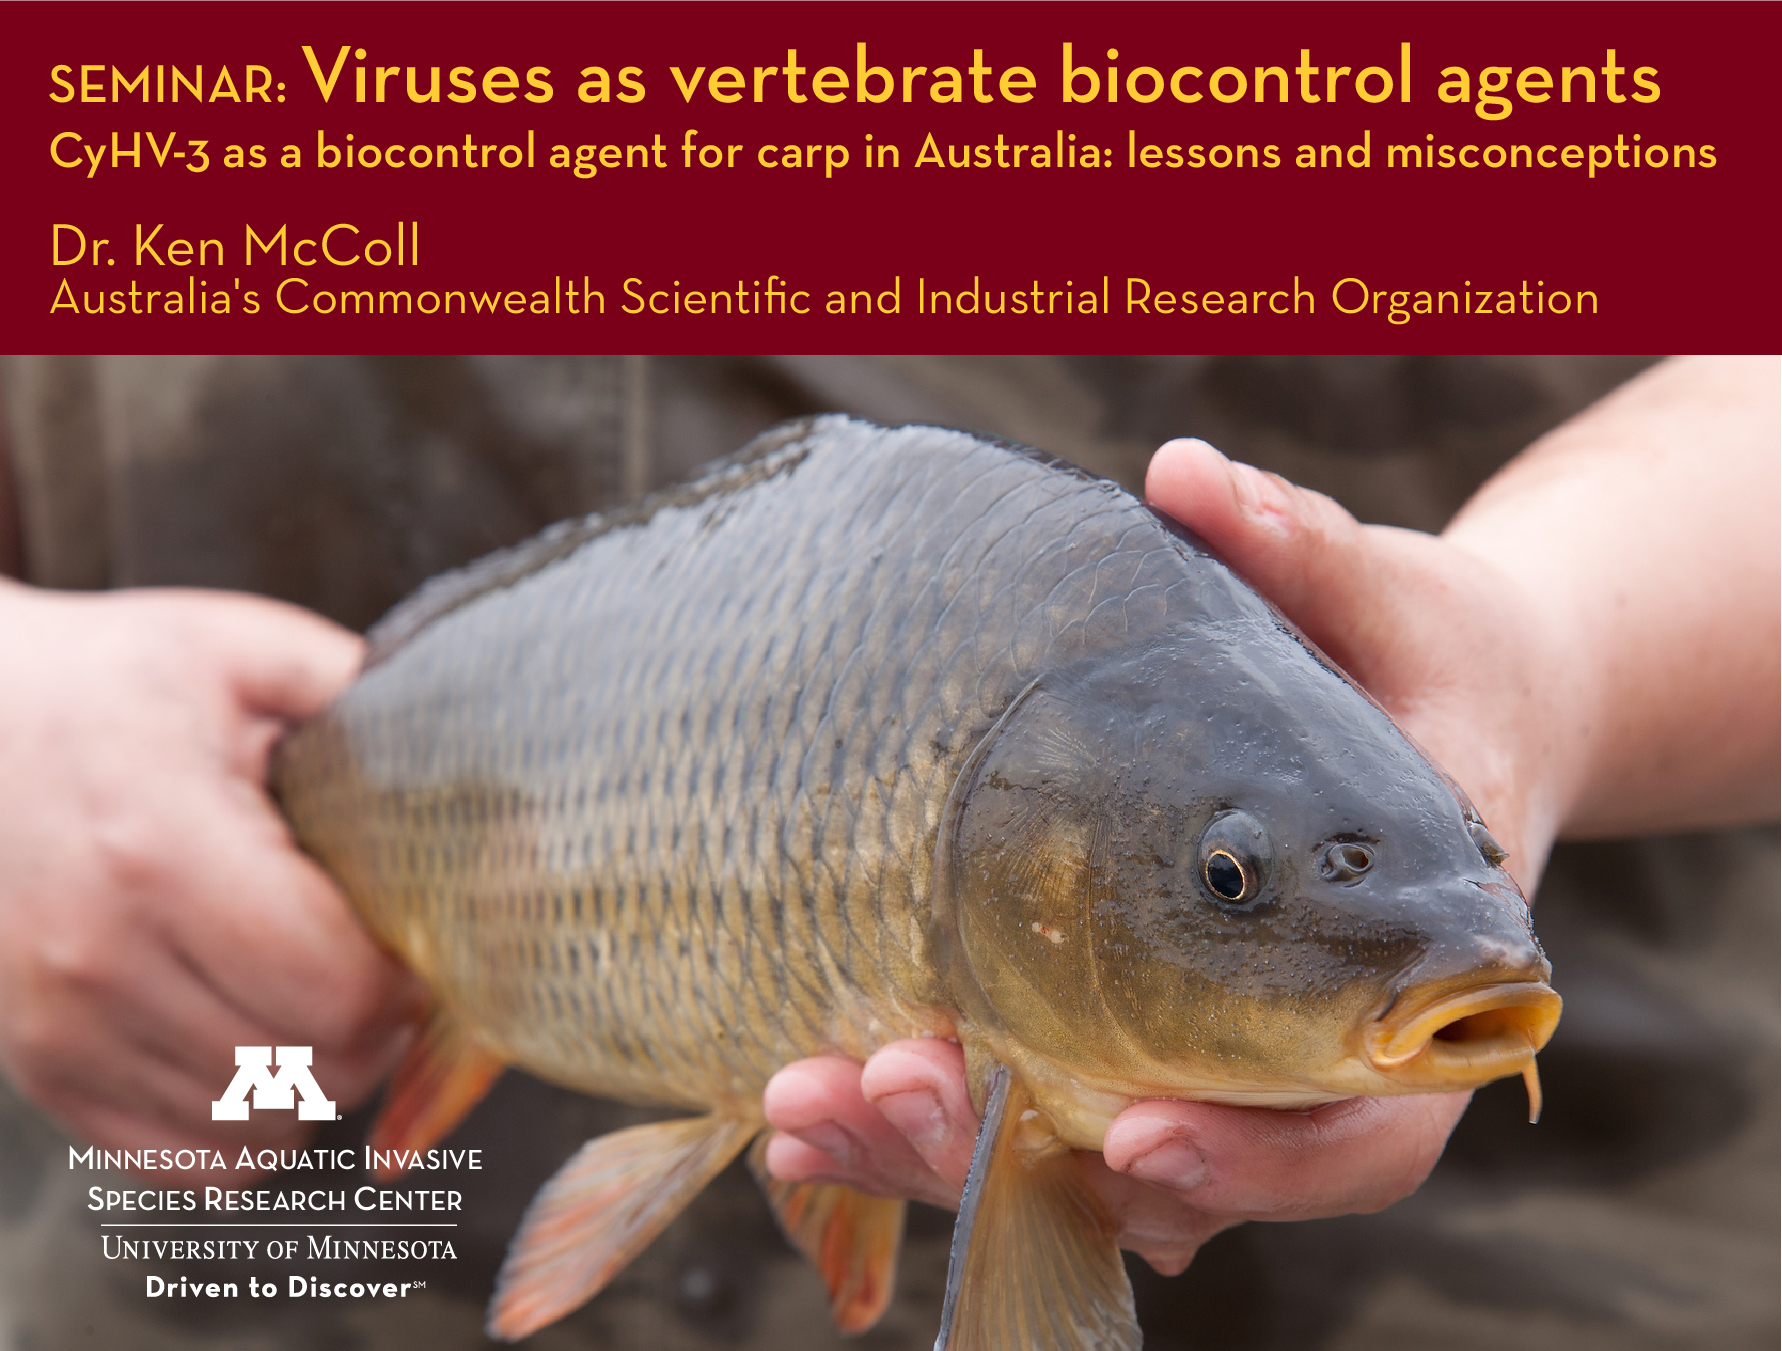 Carp with title of seminar overlayed: Viruses as vertebrate biocontrol agents